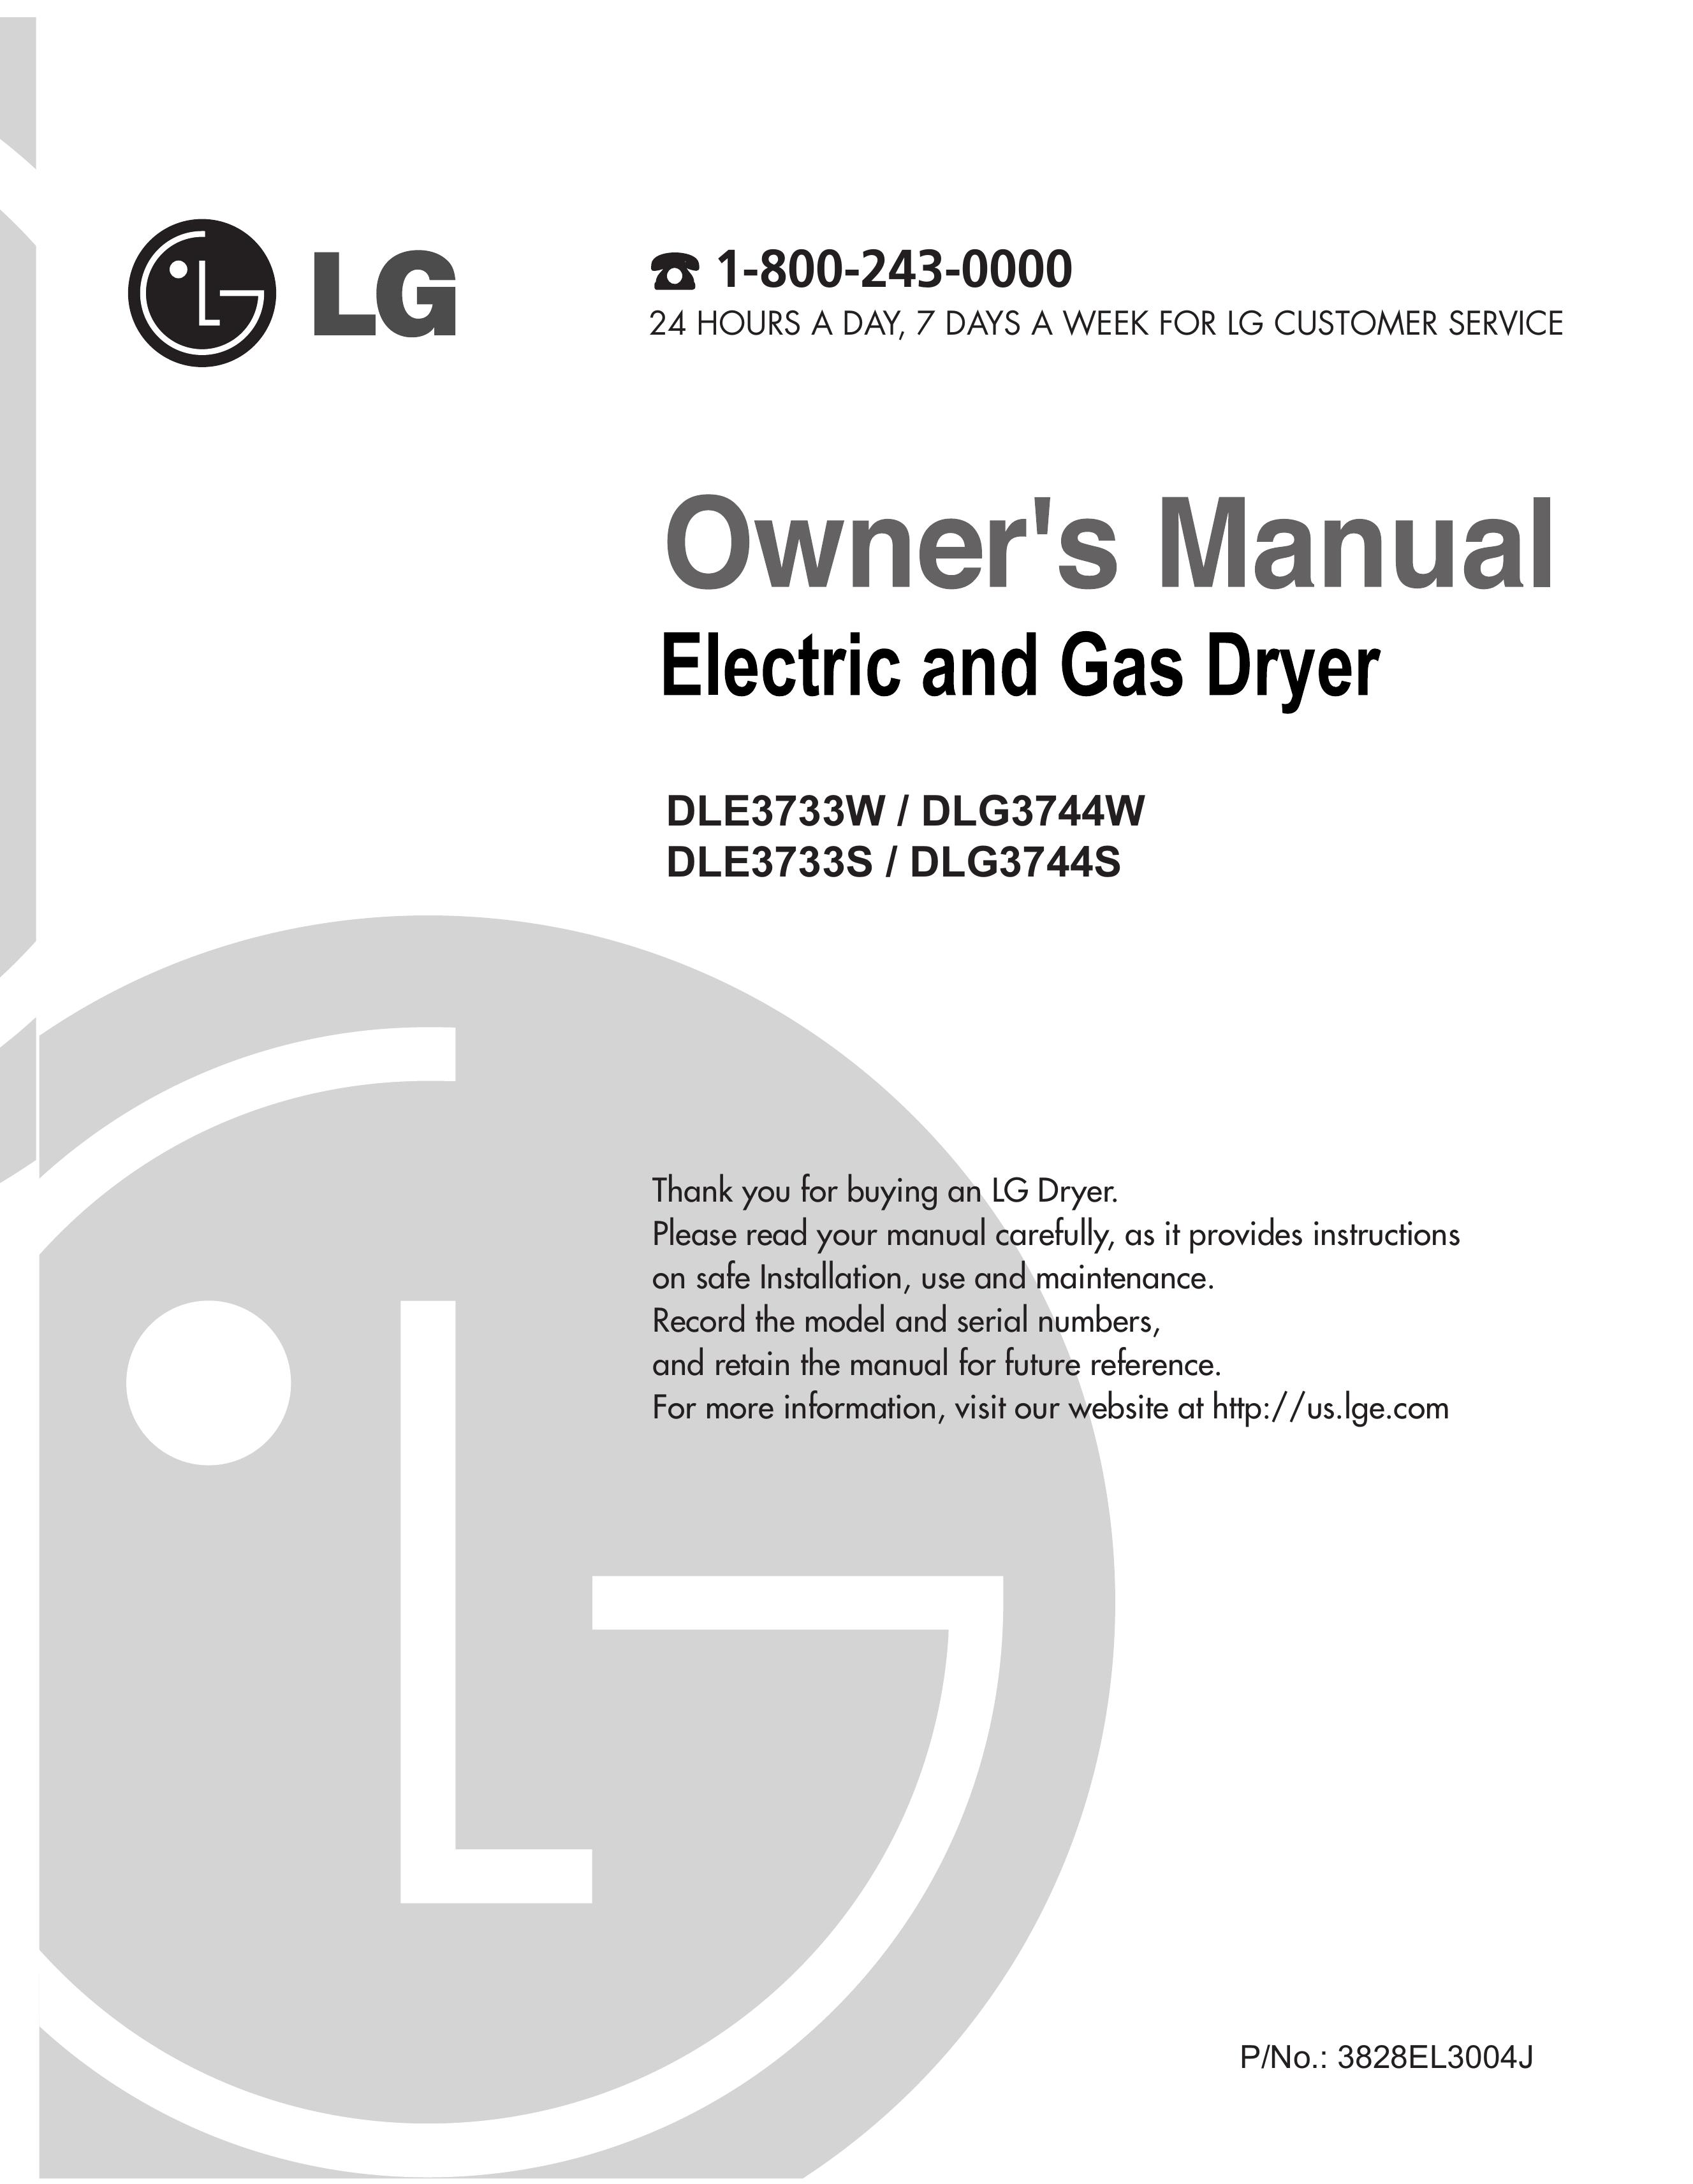 Goldstar DLG3744W Clothes Dryer User Manual